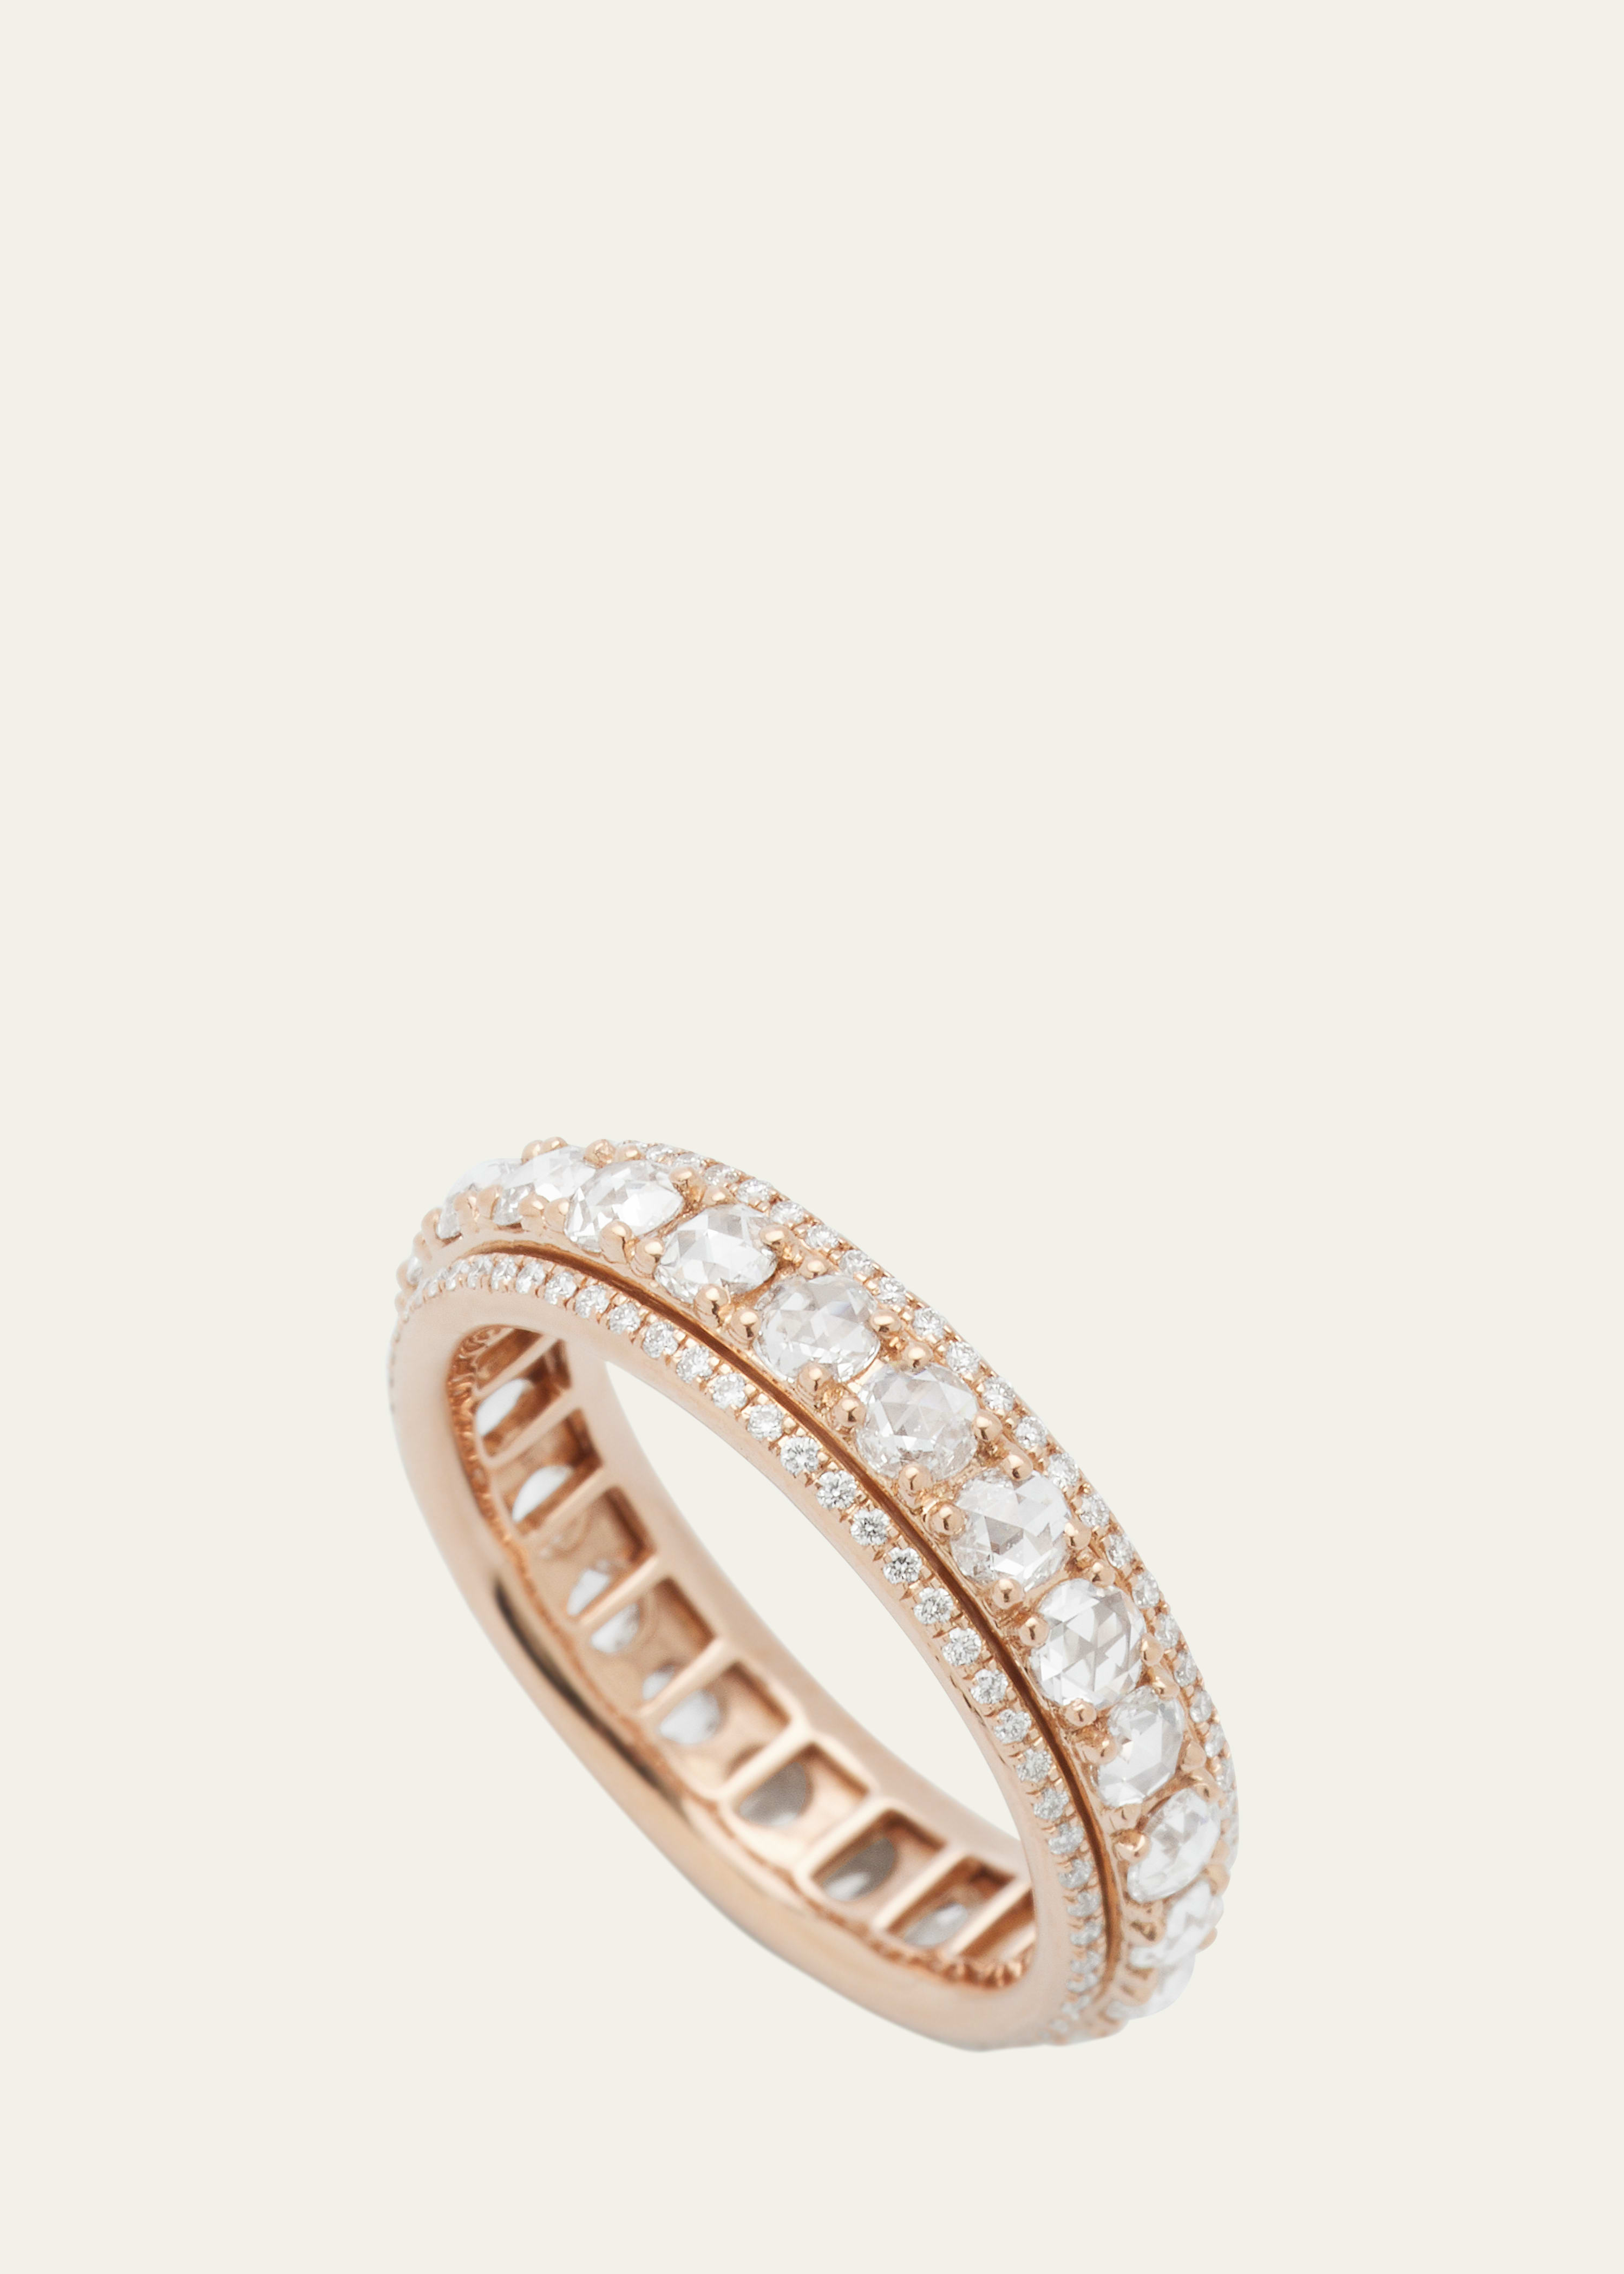 18k Rose Gold Diamond Tennis Bracelet